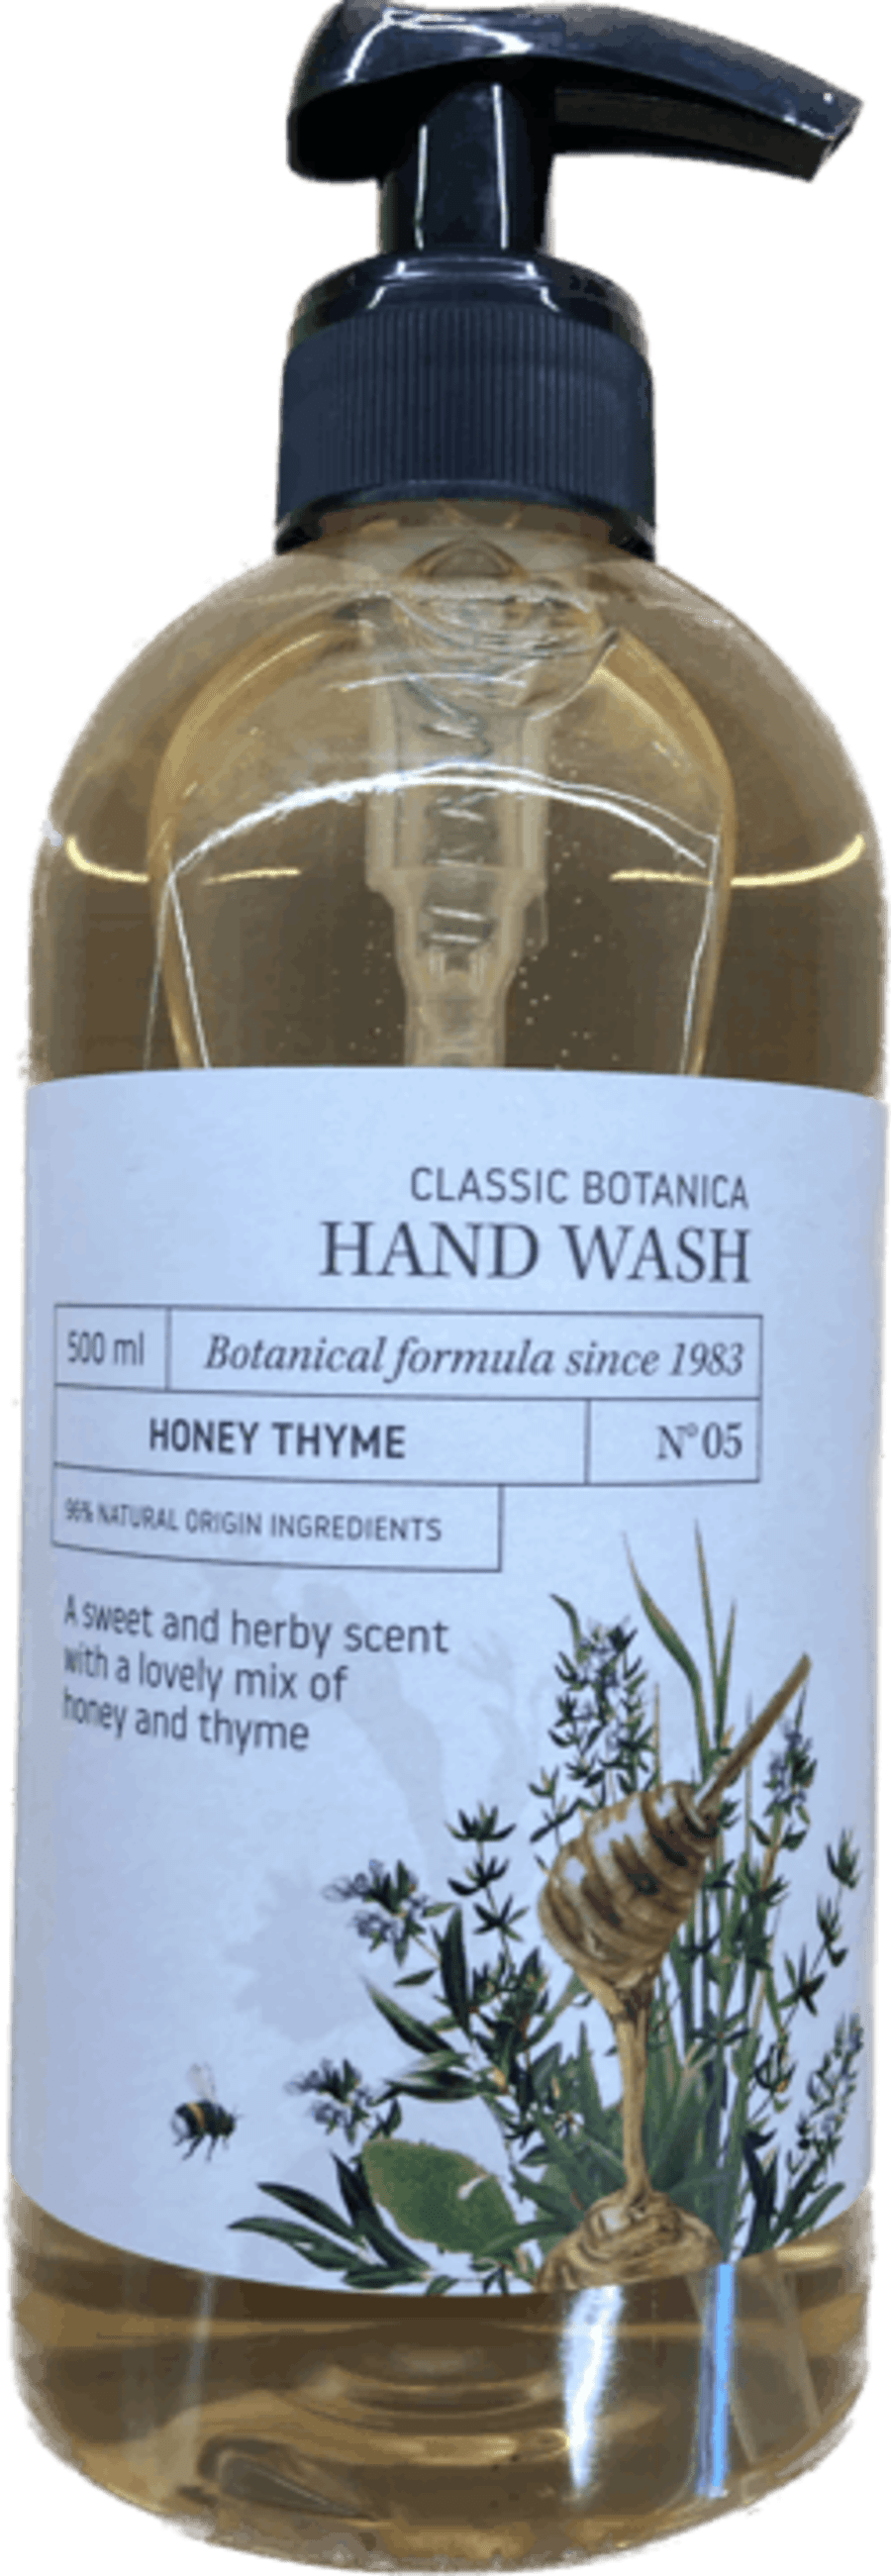 Gunry handsápa honey thyme 500 ml